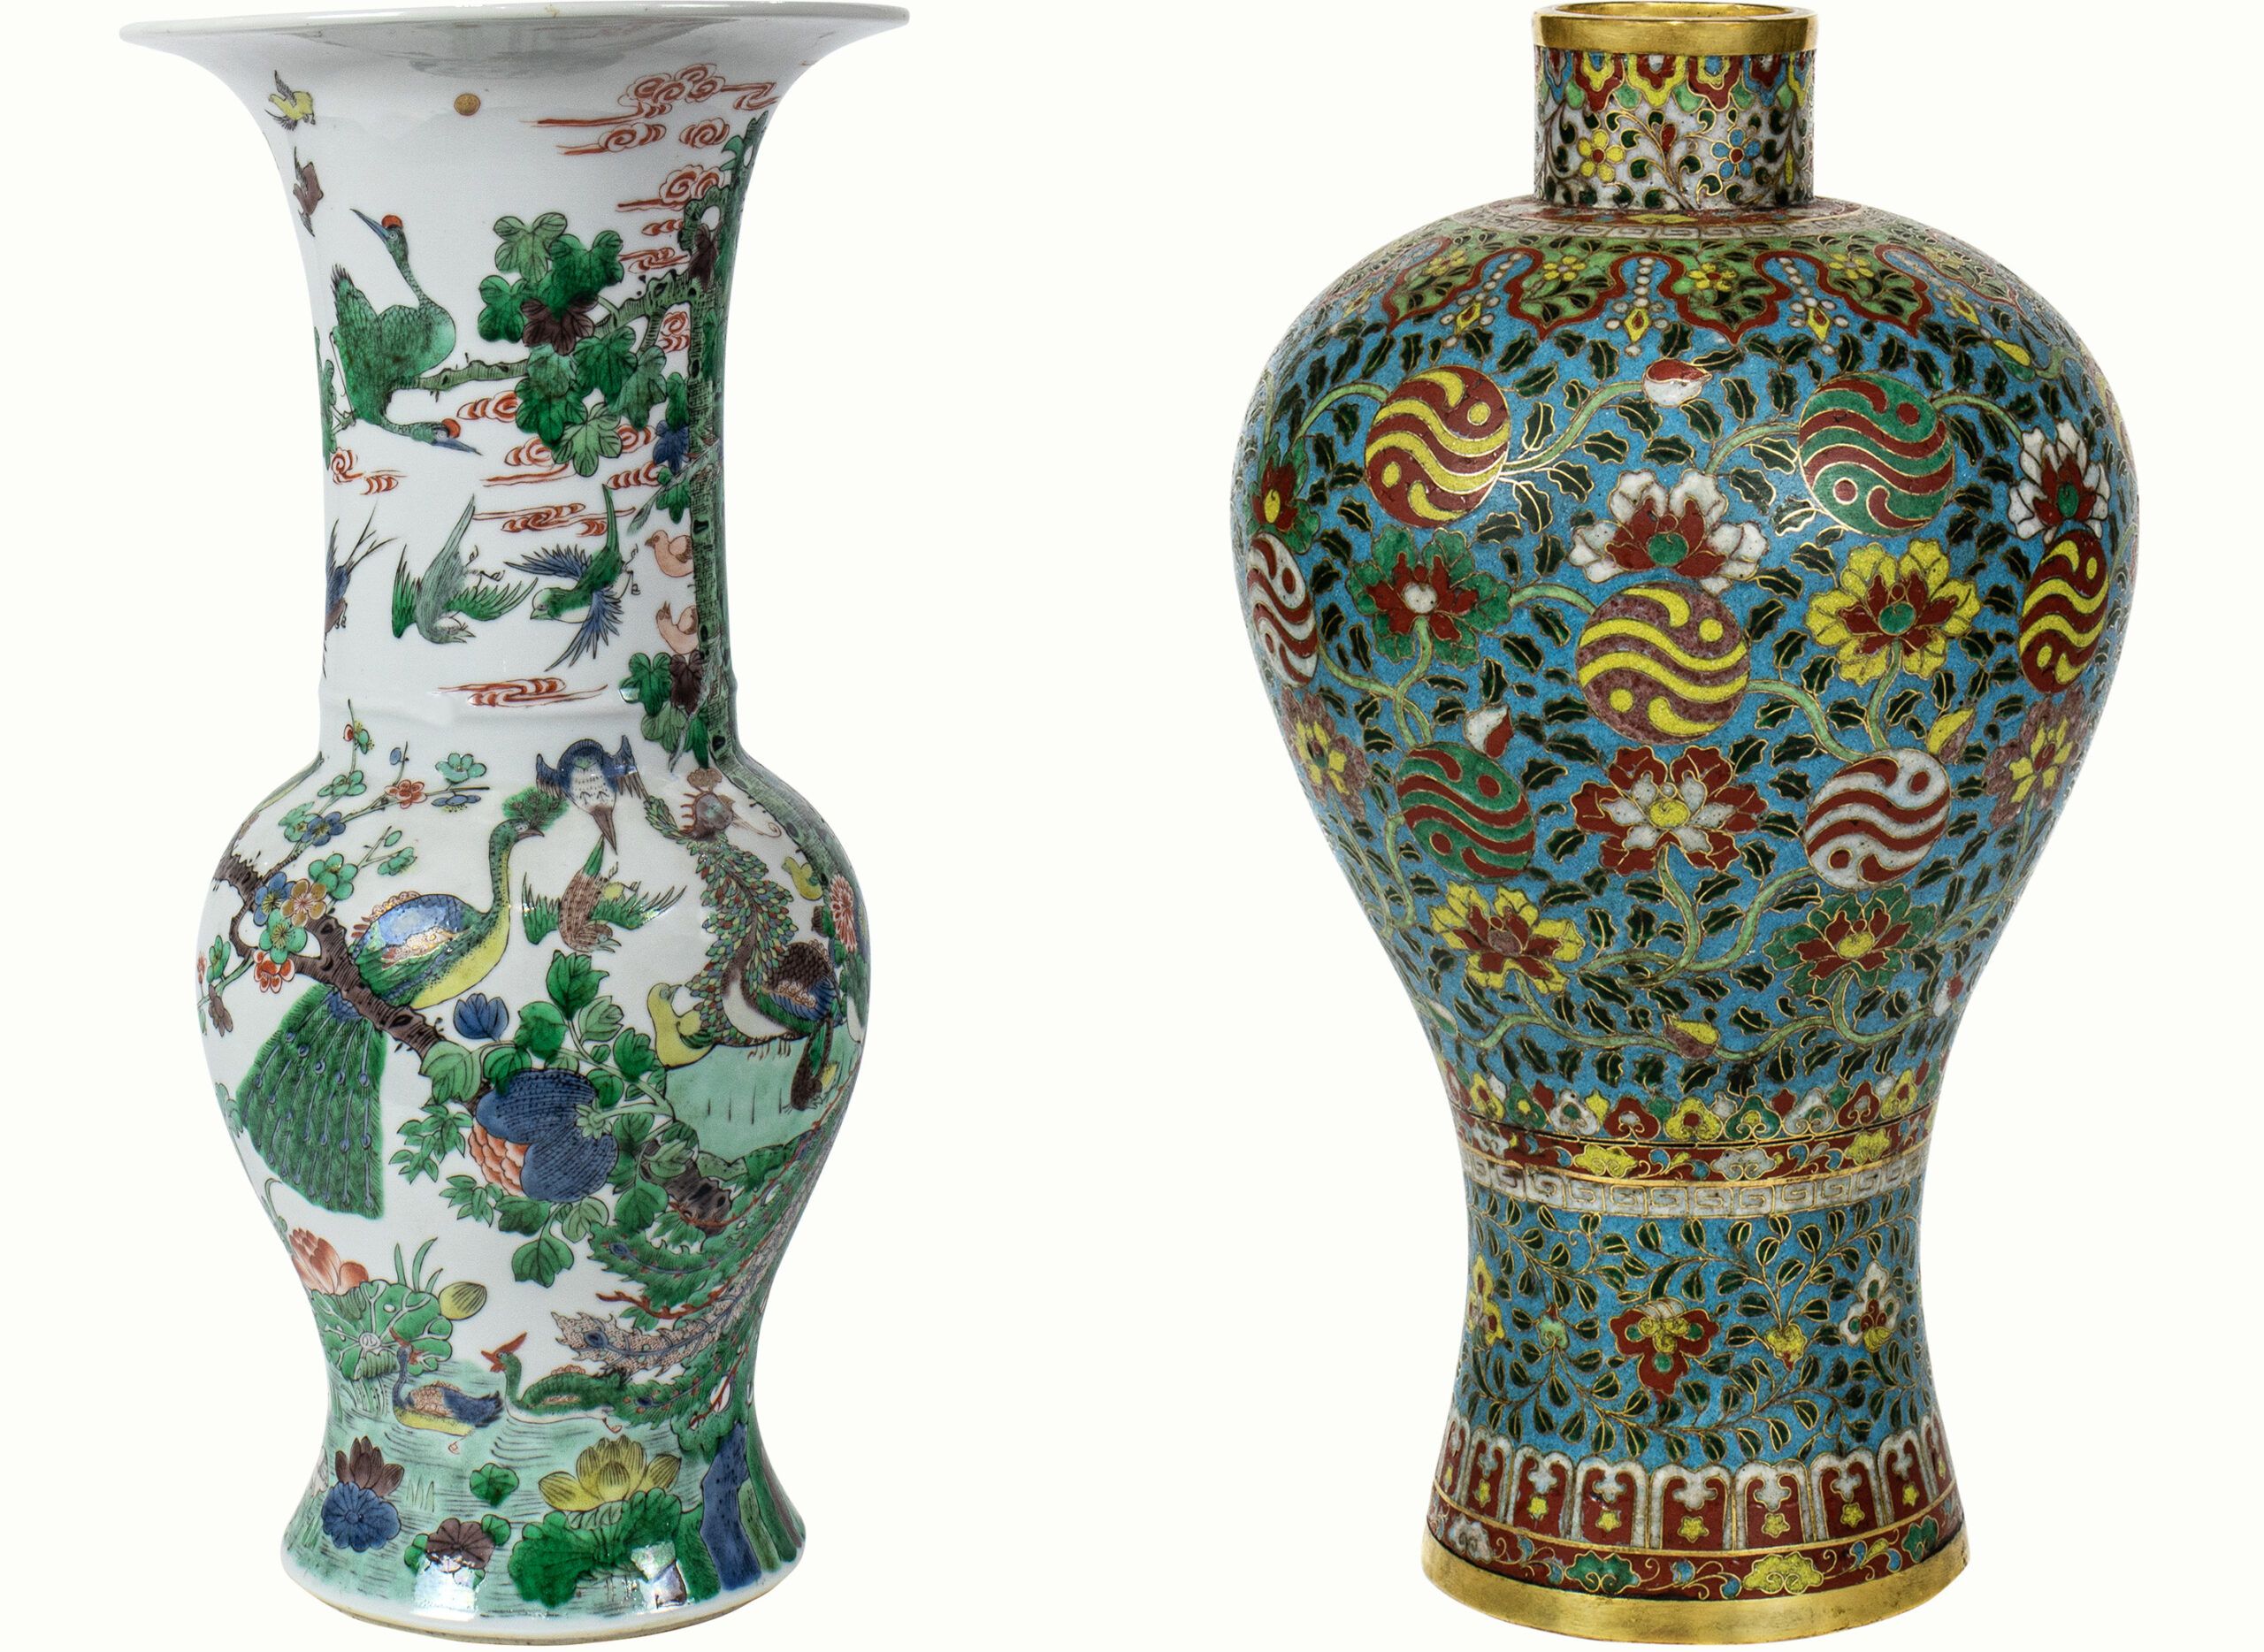 Left: A Chinese famille verte porcelain vase.Right: A Chinese cloisonné enamel meiping vase.